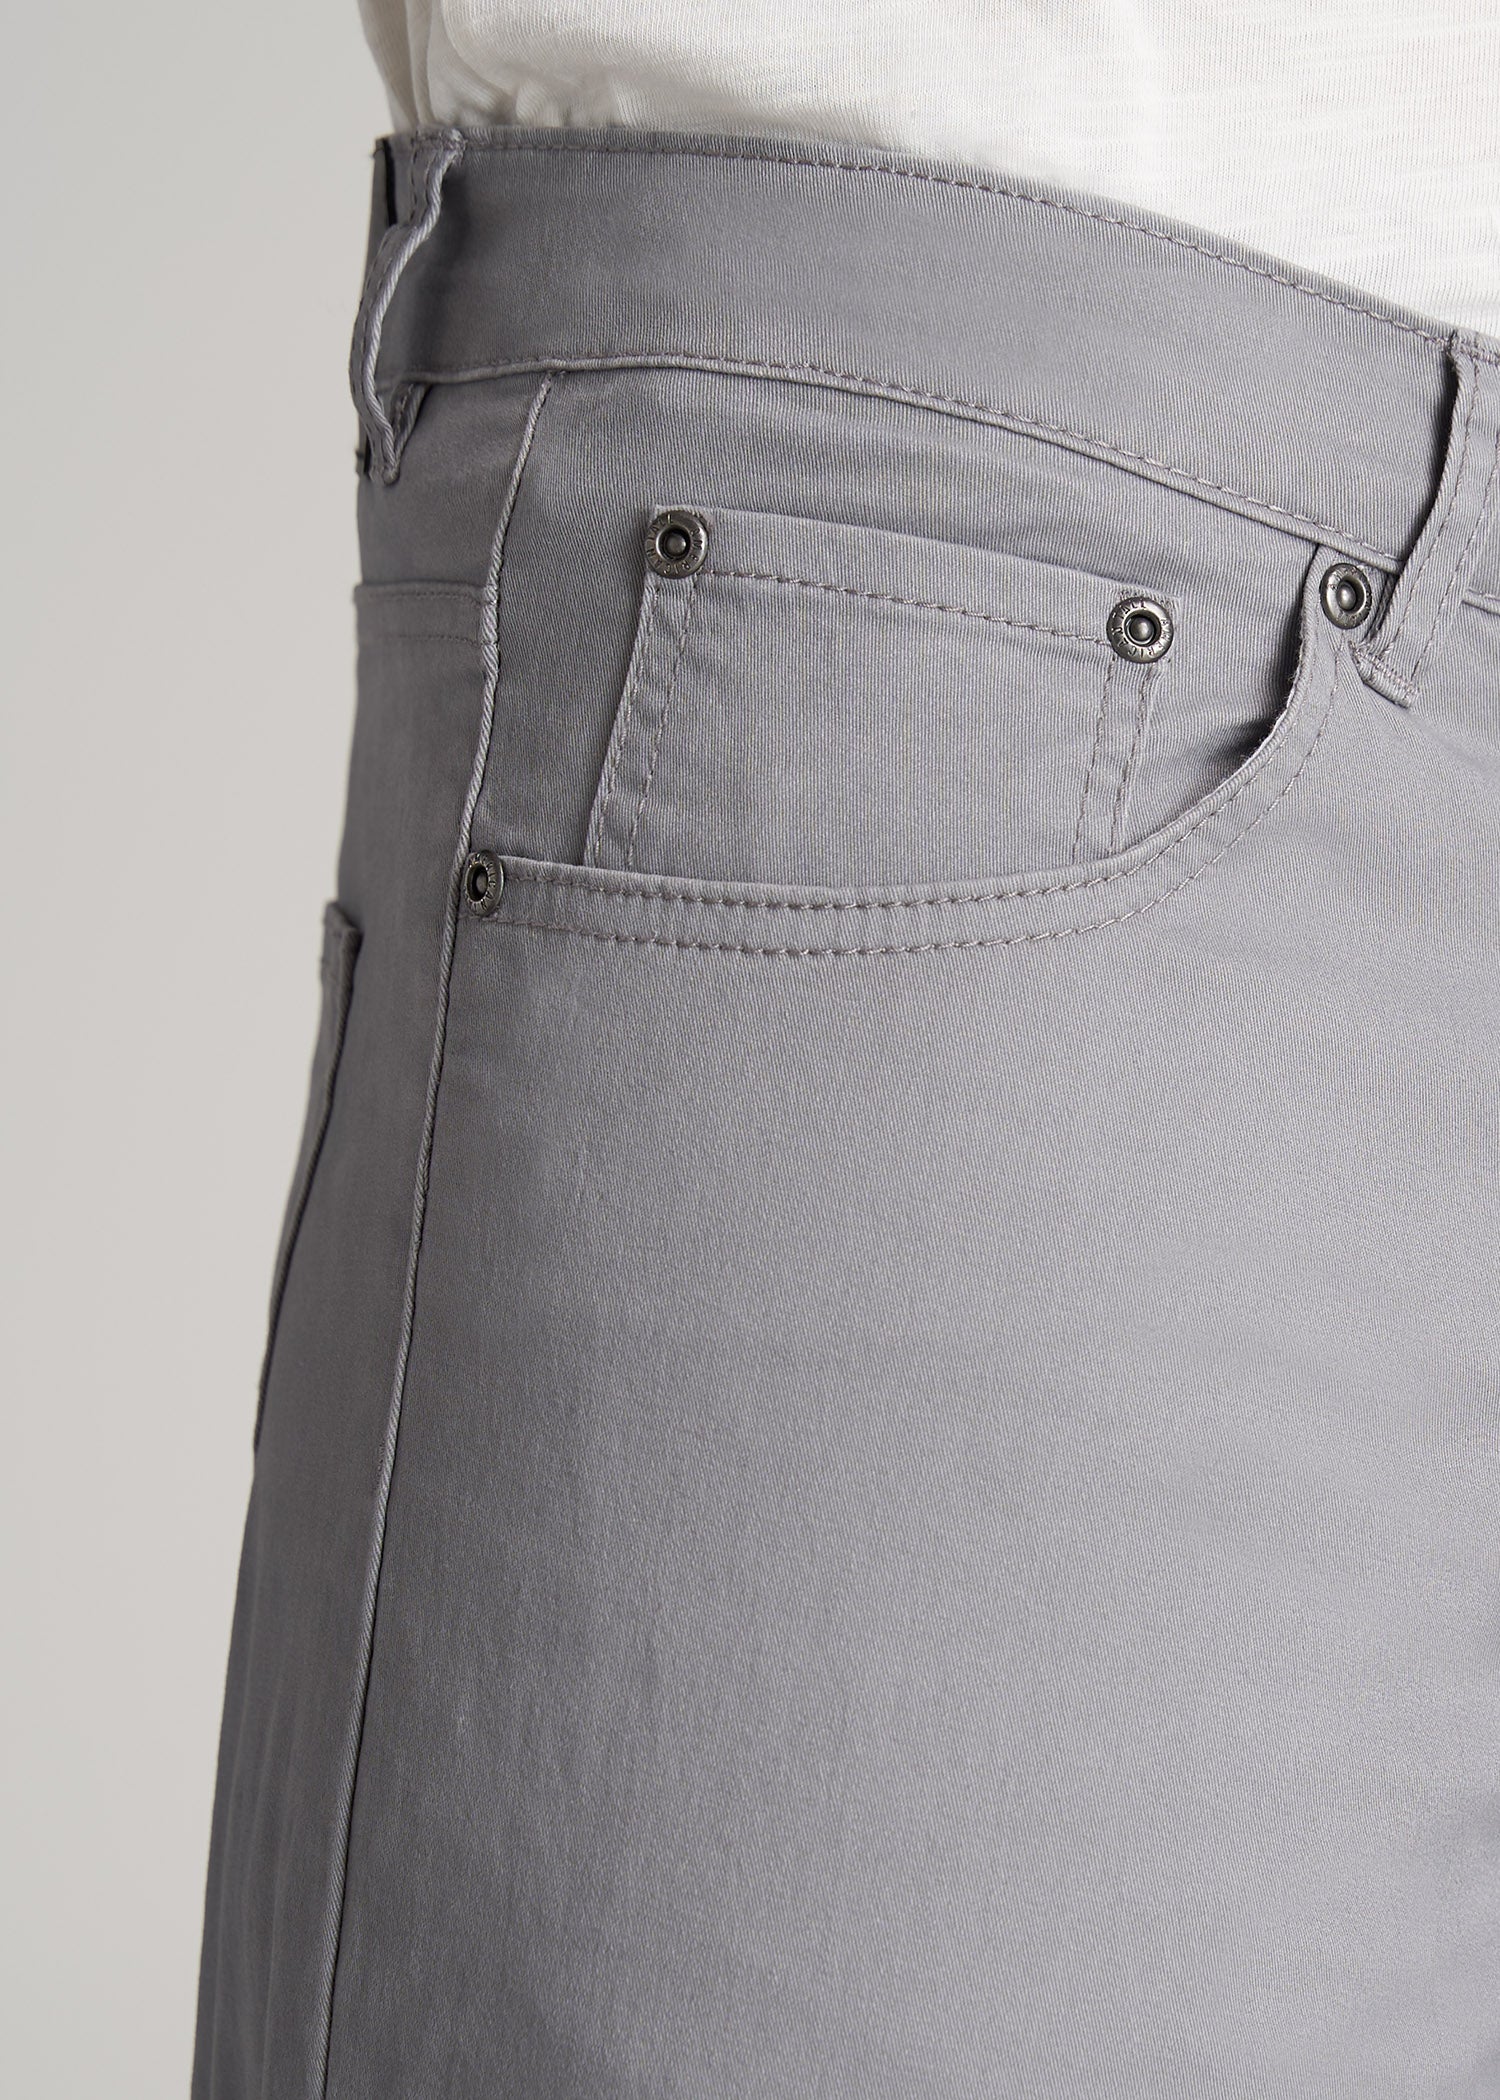 Men's Tall Dylan Slim Fit Five-Pocket Pants Pebble Grey – American Tall